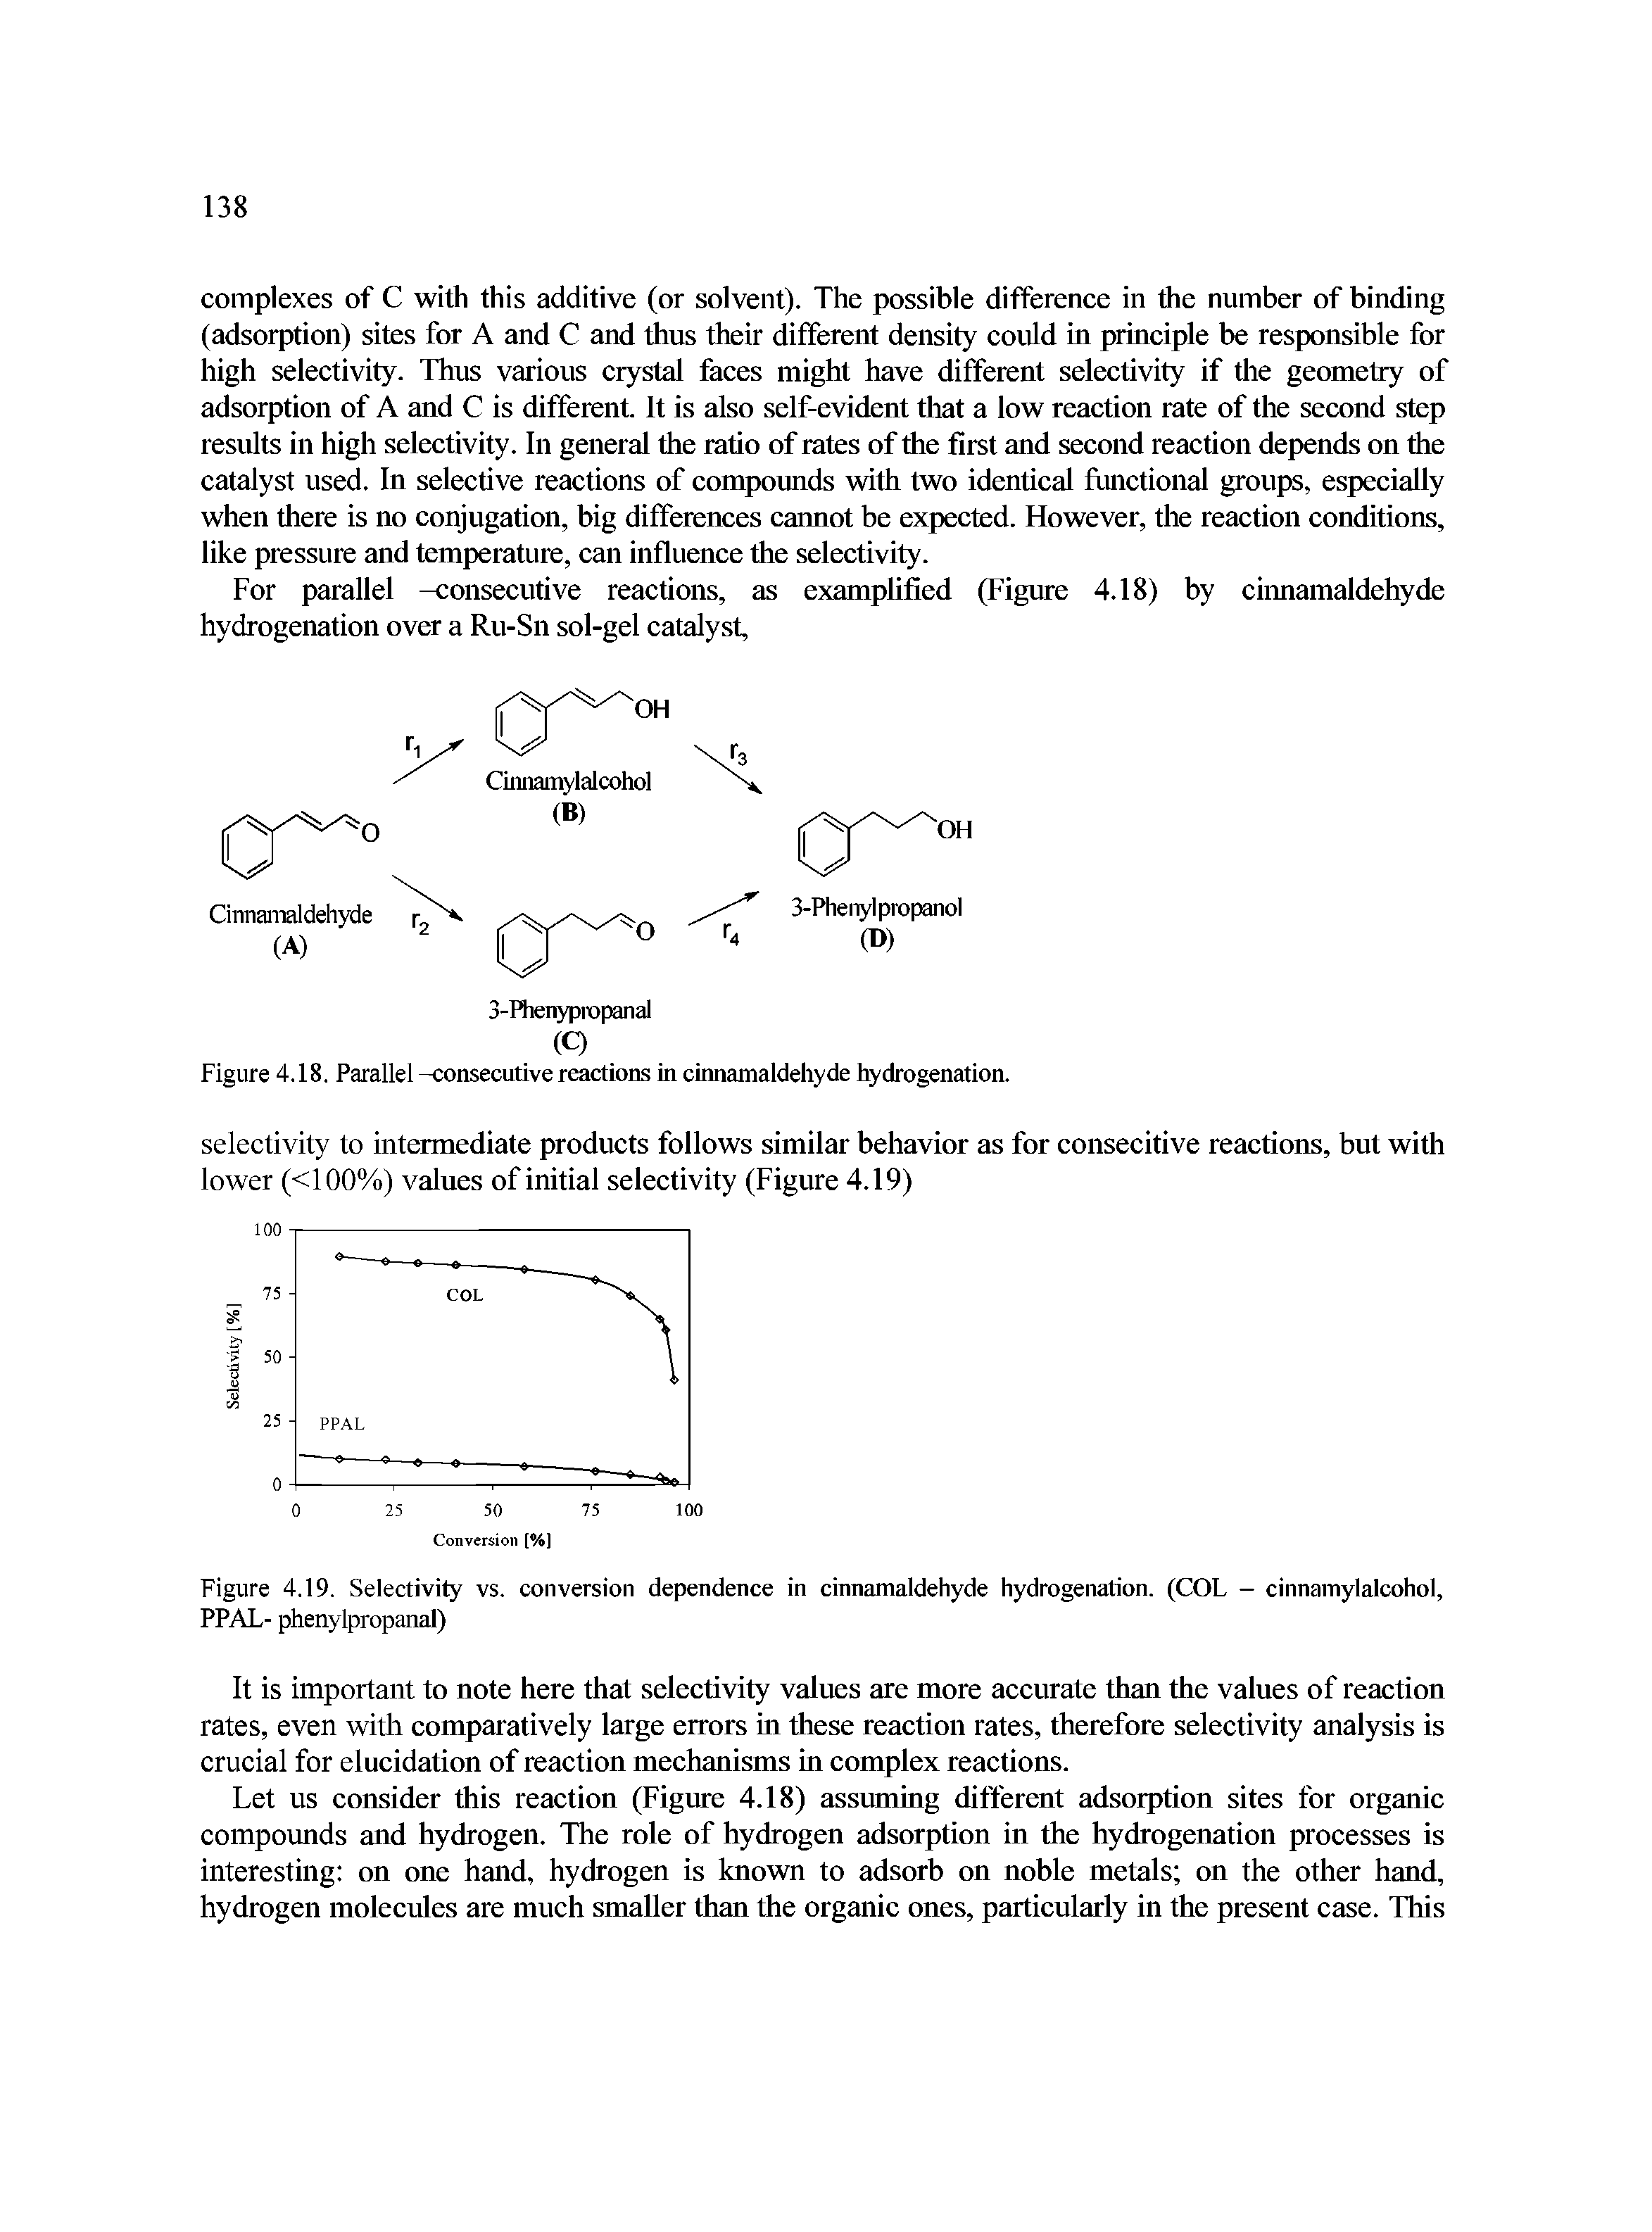 Figure 4.18. Parallel -consecutive reactions in cinnamaldehyde hydrogenation.